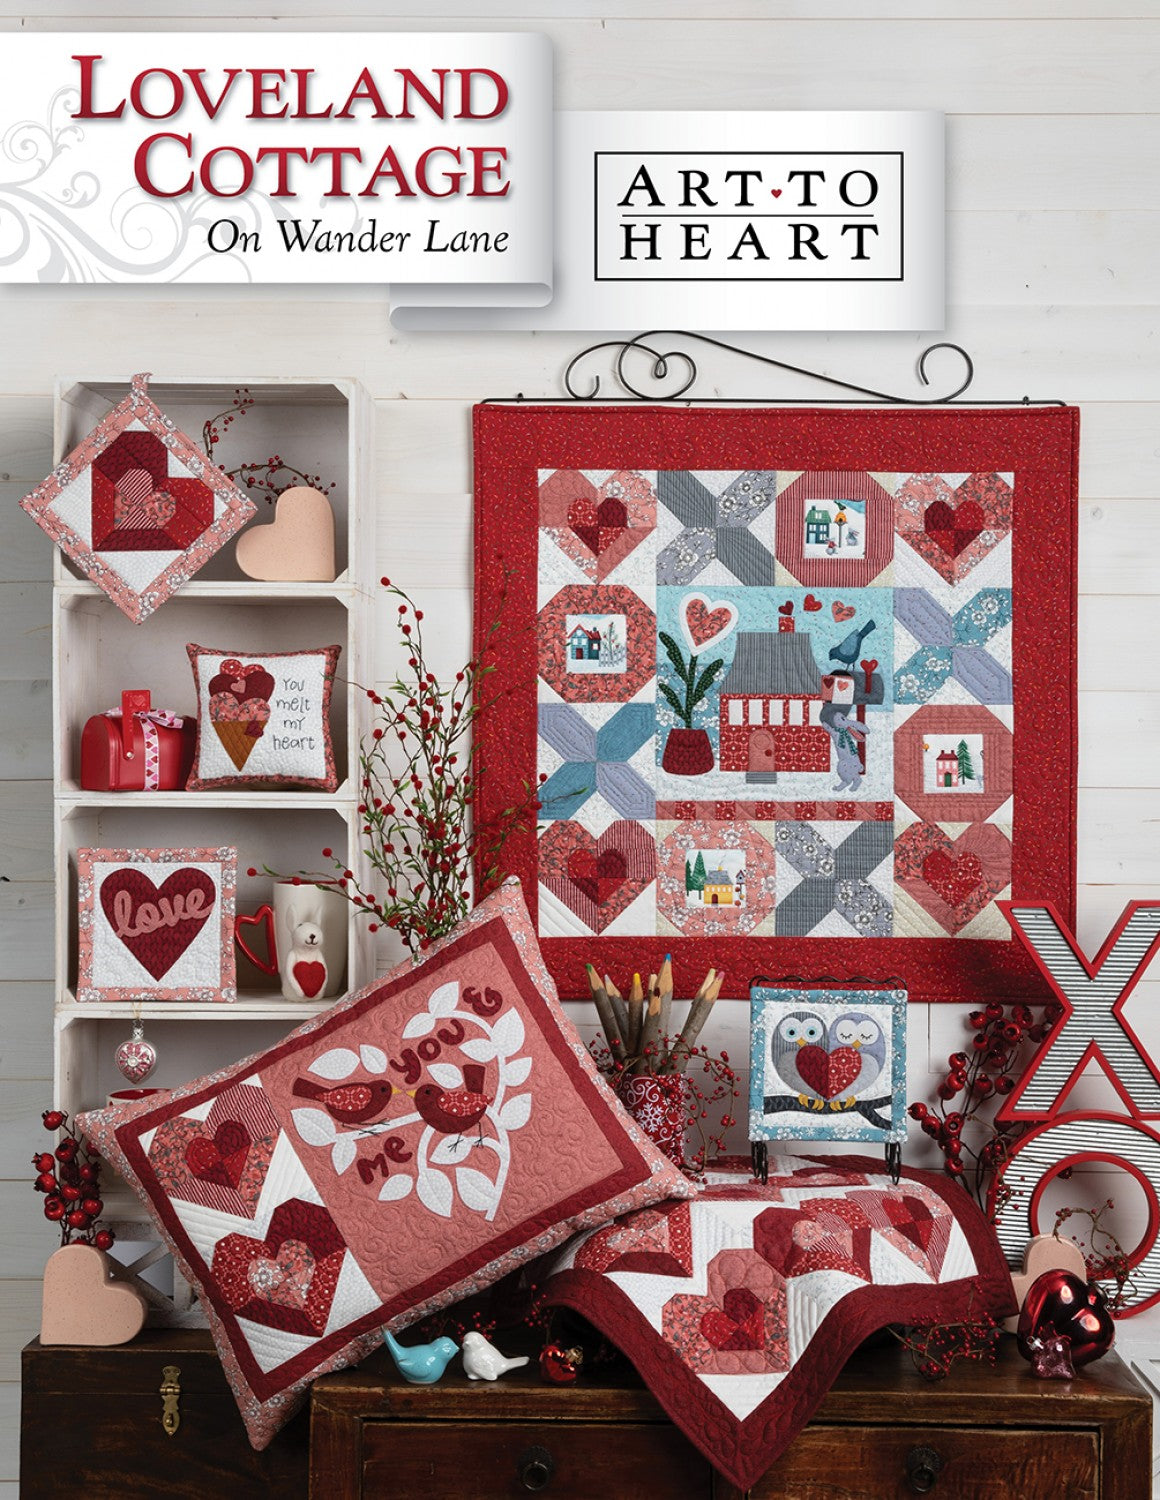 Loveland Cottage on Wander Lane Quilt Pattern (February - Block 2 ) by Nancy Halvorsen of Art to Heart